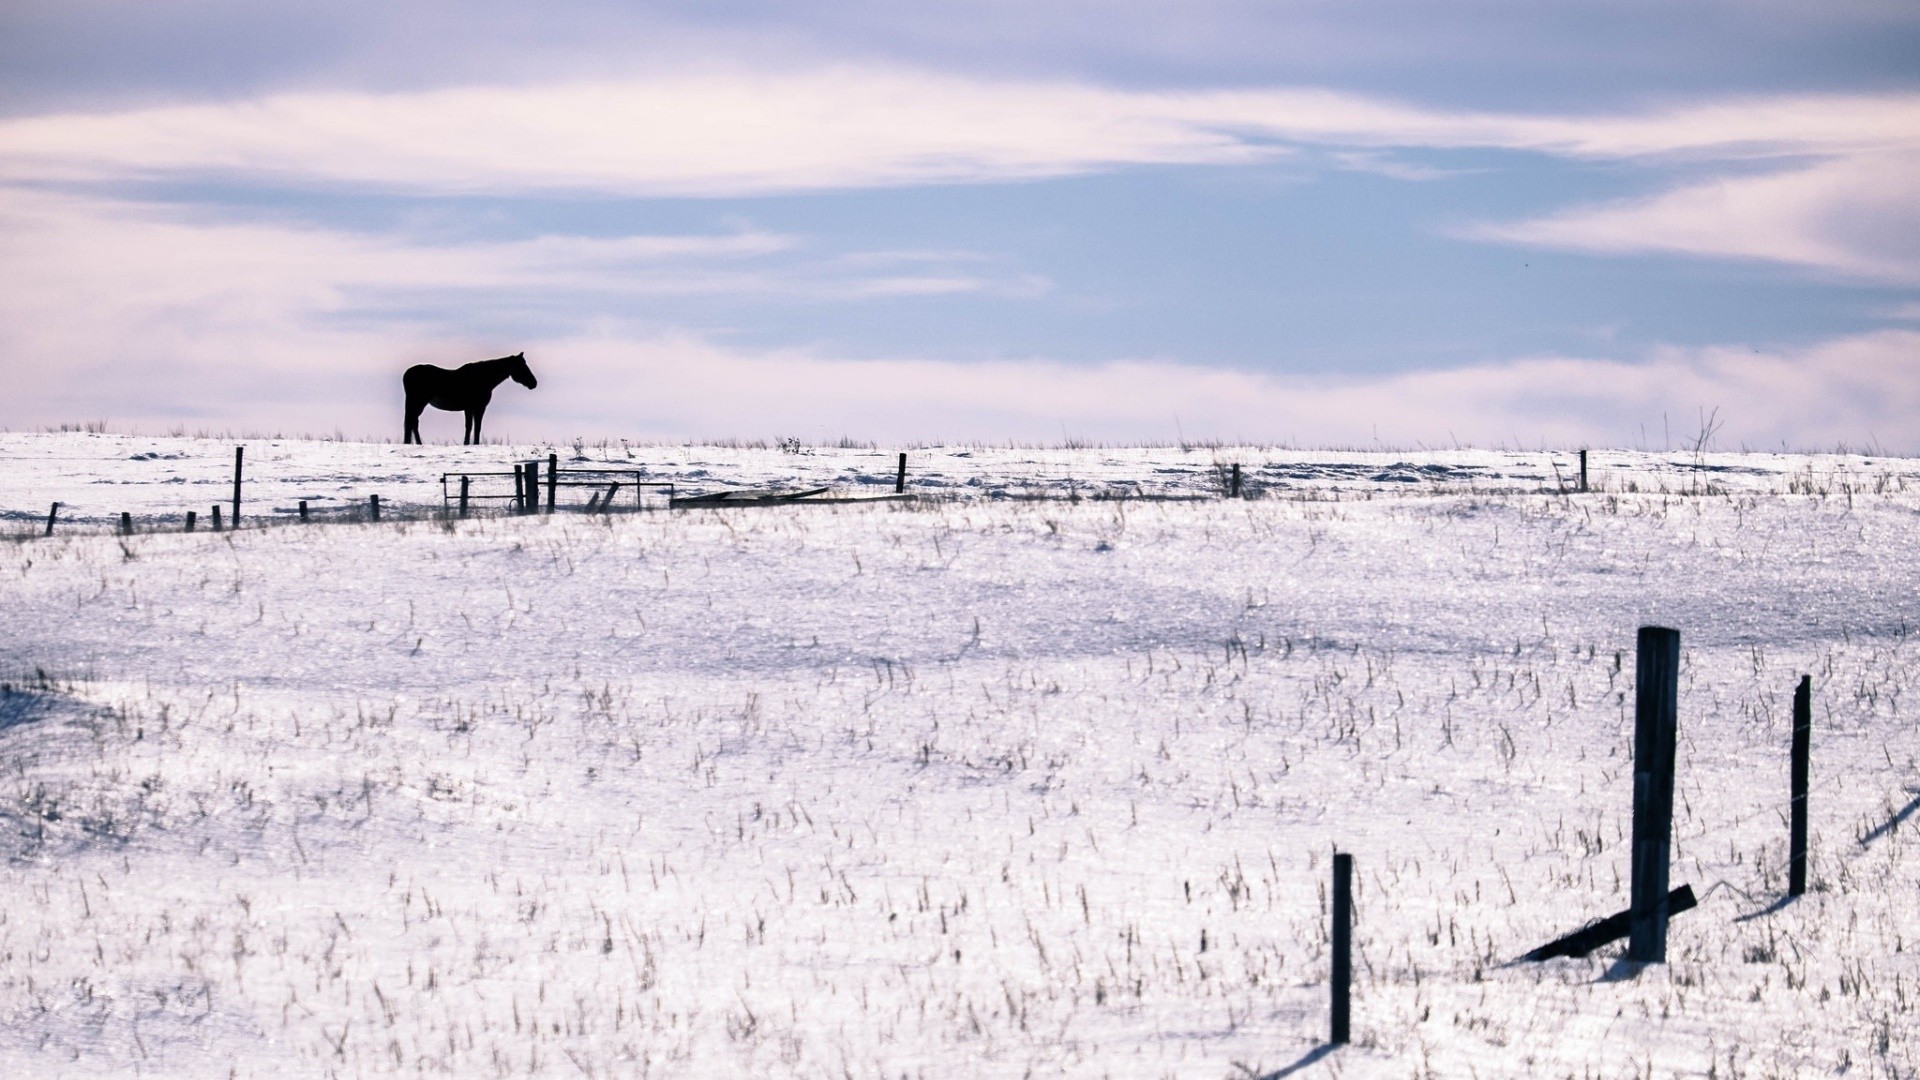 General 1920x1080 horse winter animals landscape snow field daylight silhouette